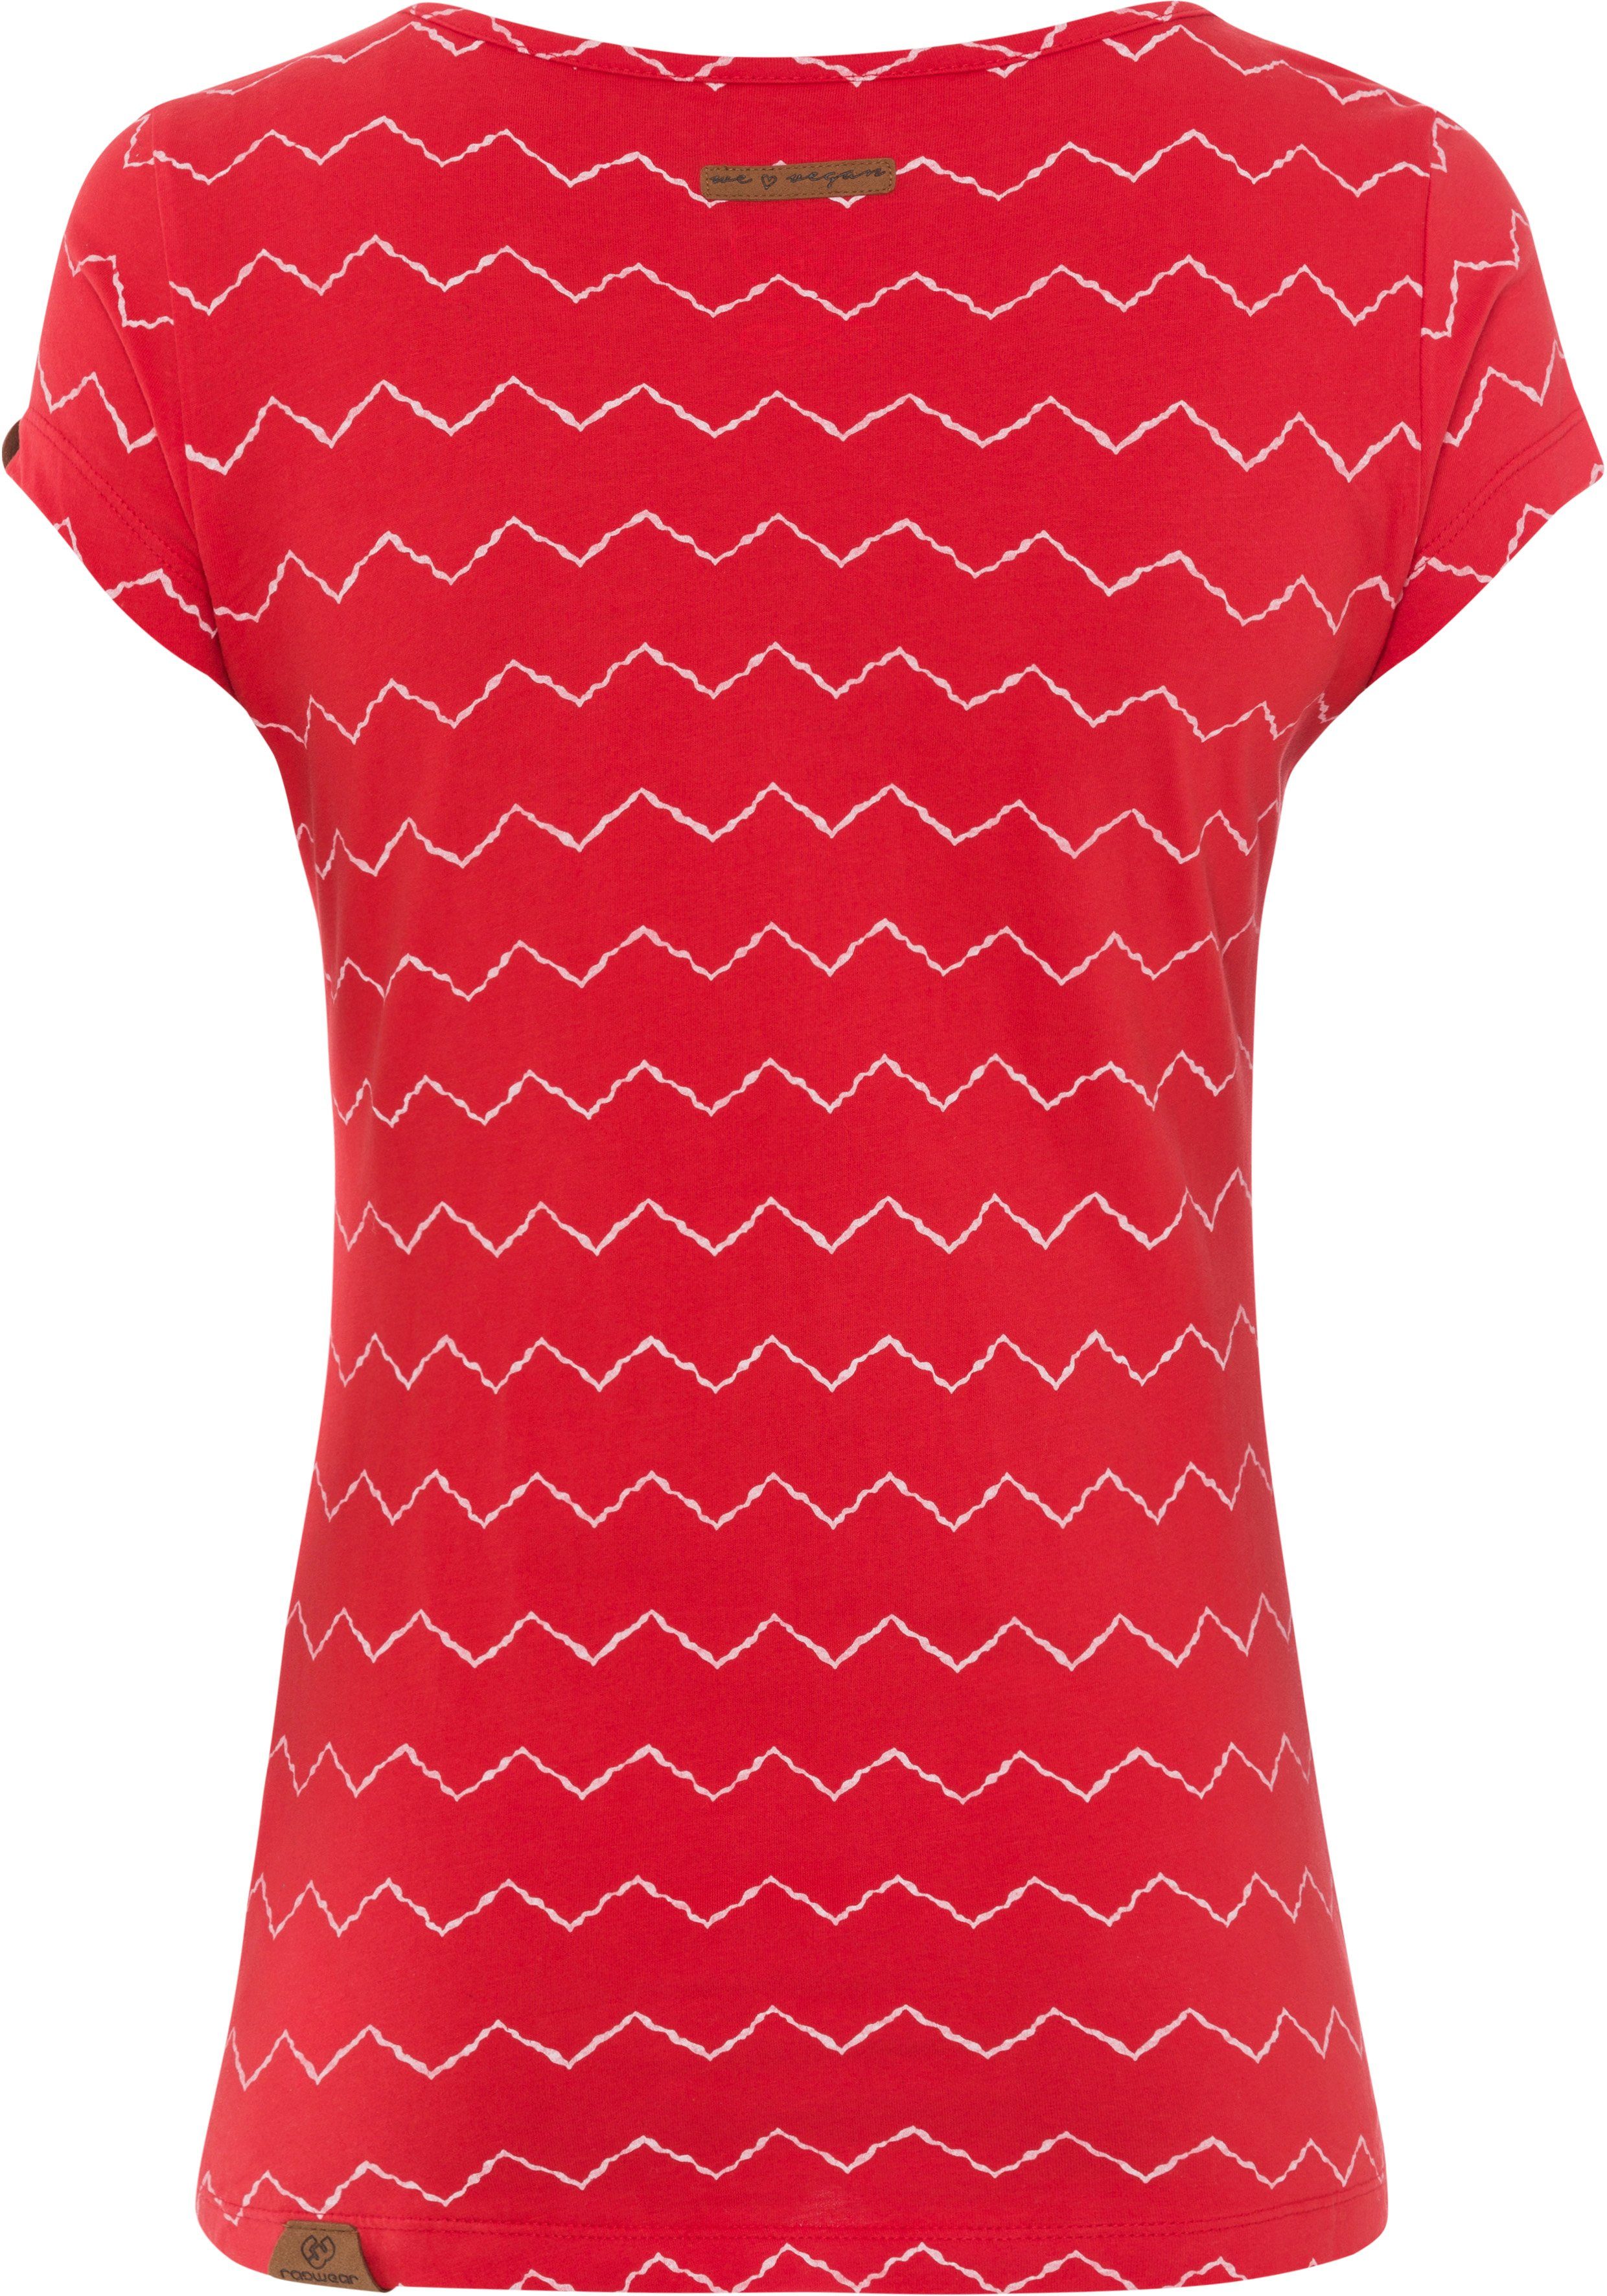 ZIG MINT Zig Allover-Print-Design red T-Shirt 4000 Ragwear Zag ZAG im